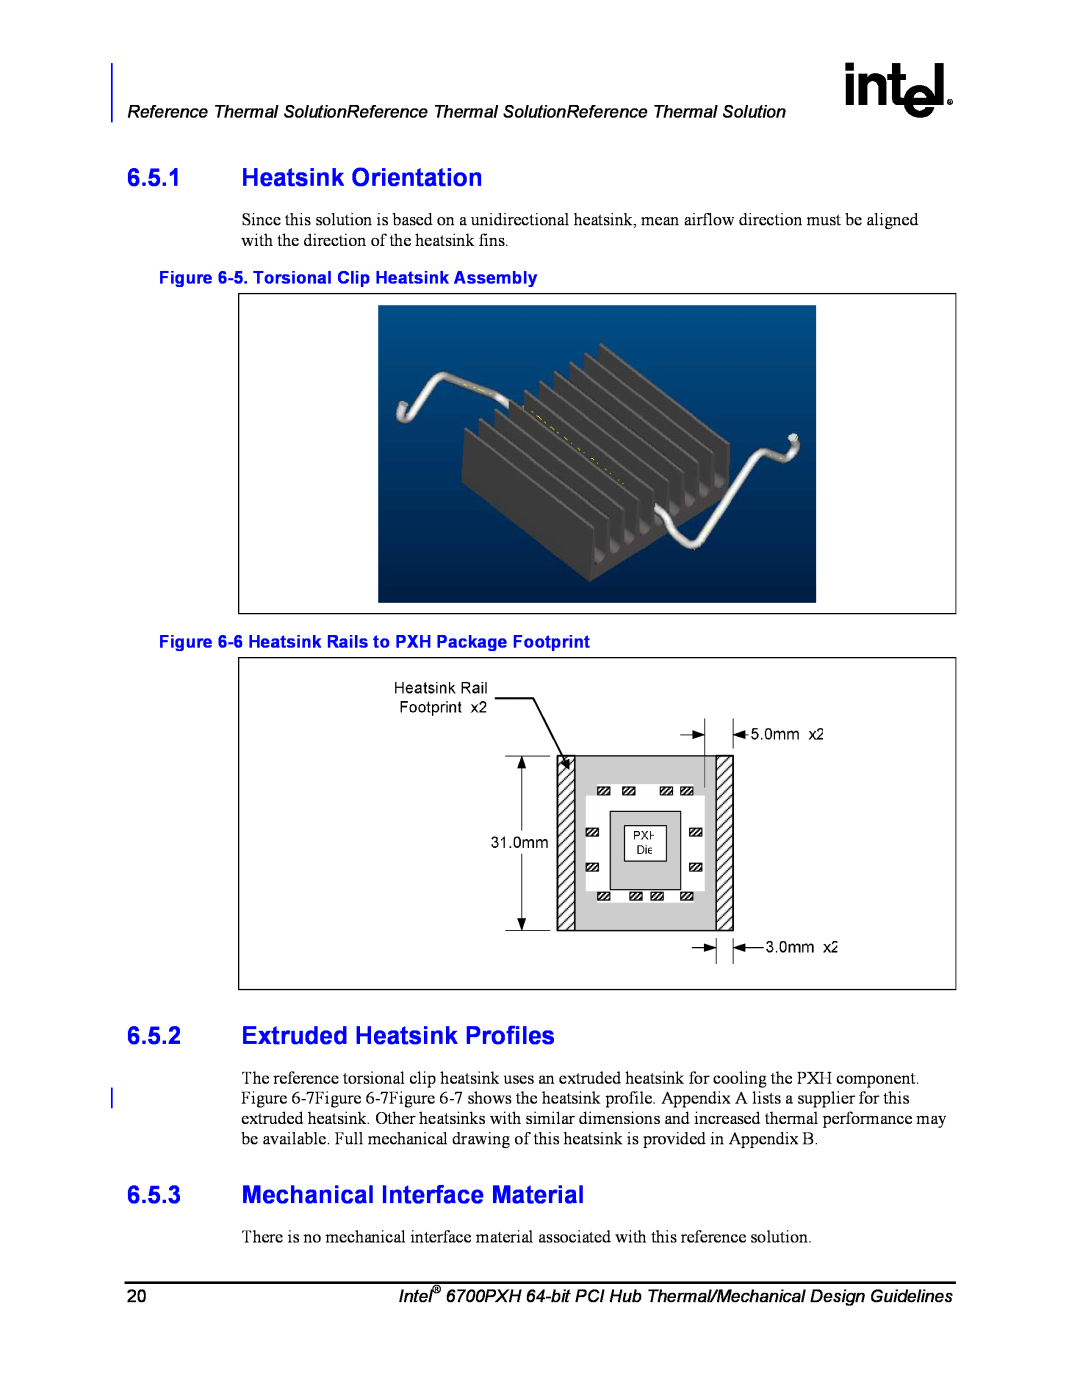 Intel 6700PXH manual Heatsink Orientation, Extruded Heatsink Profiles, Mechanical Interface Material 